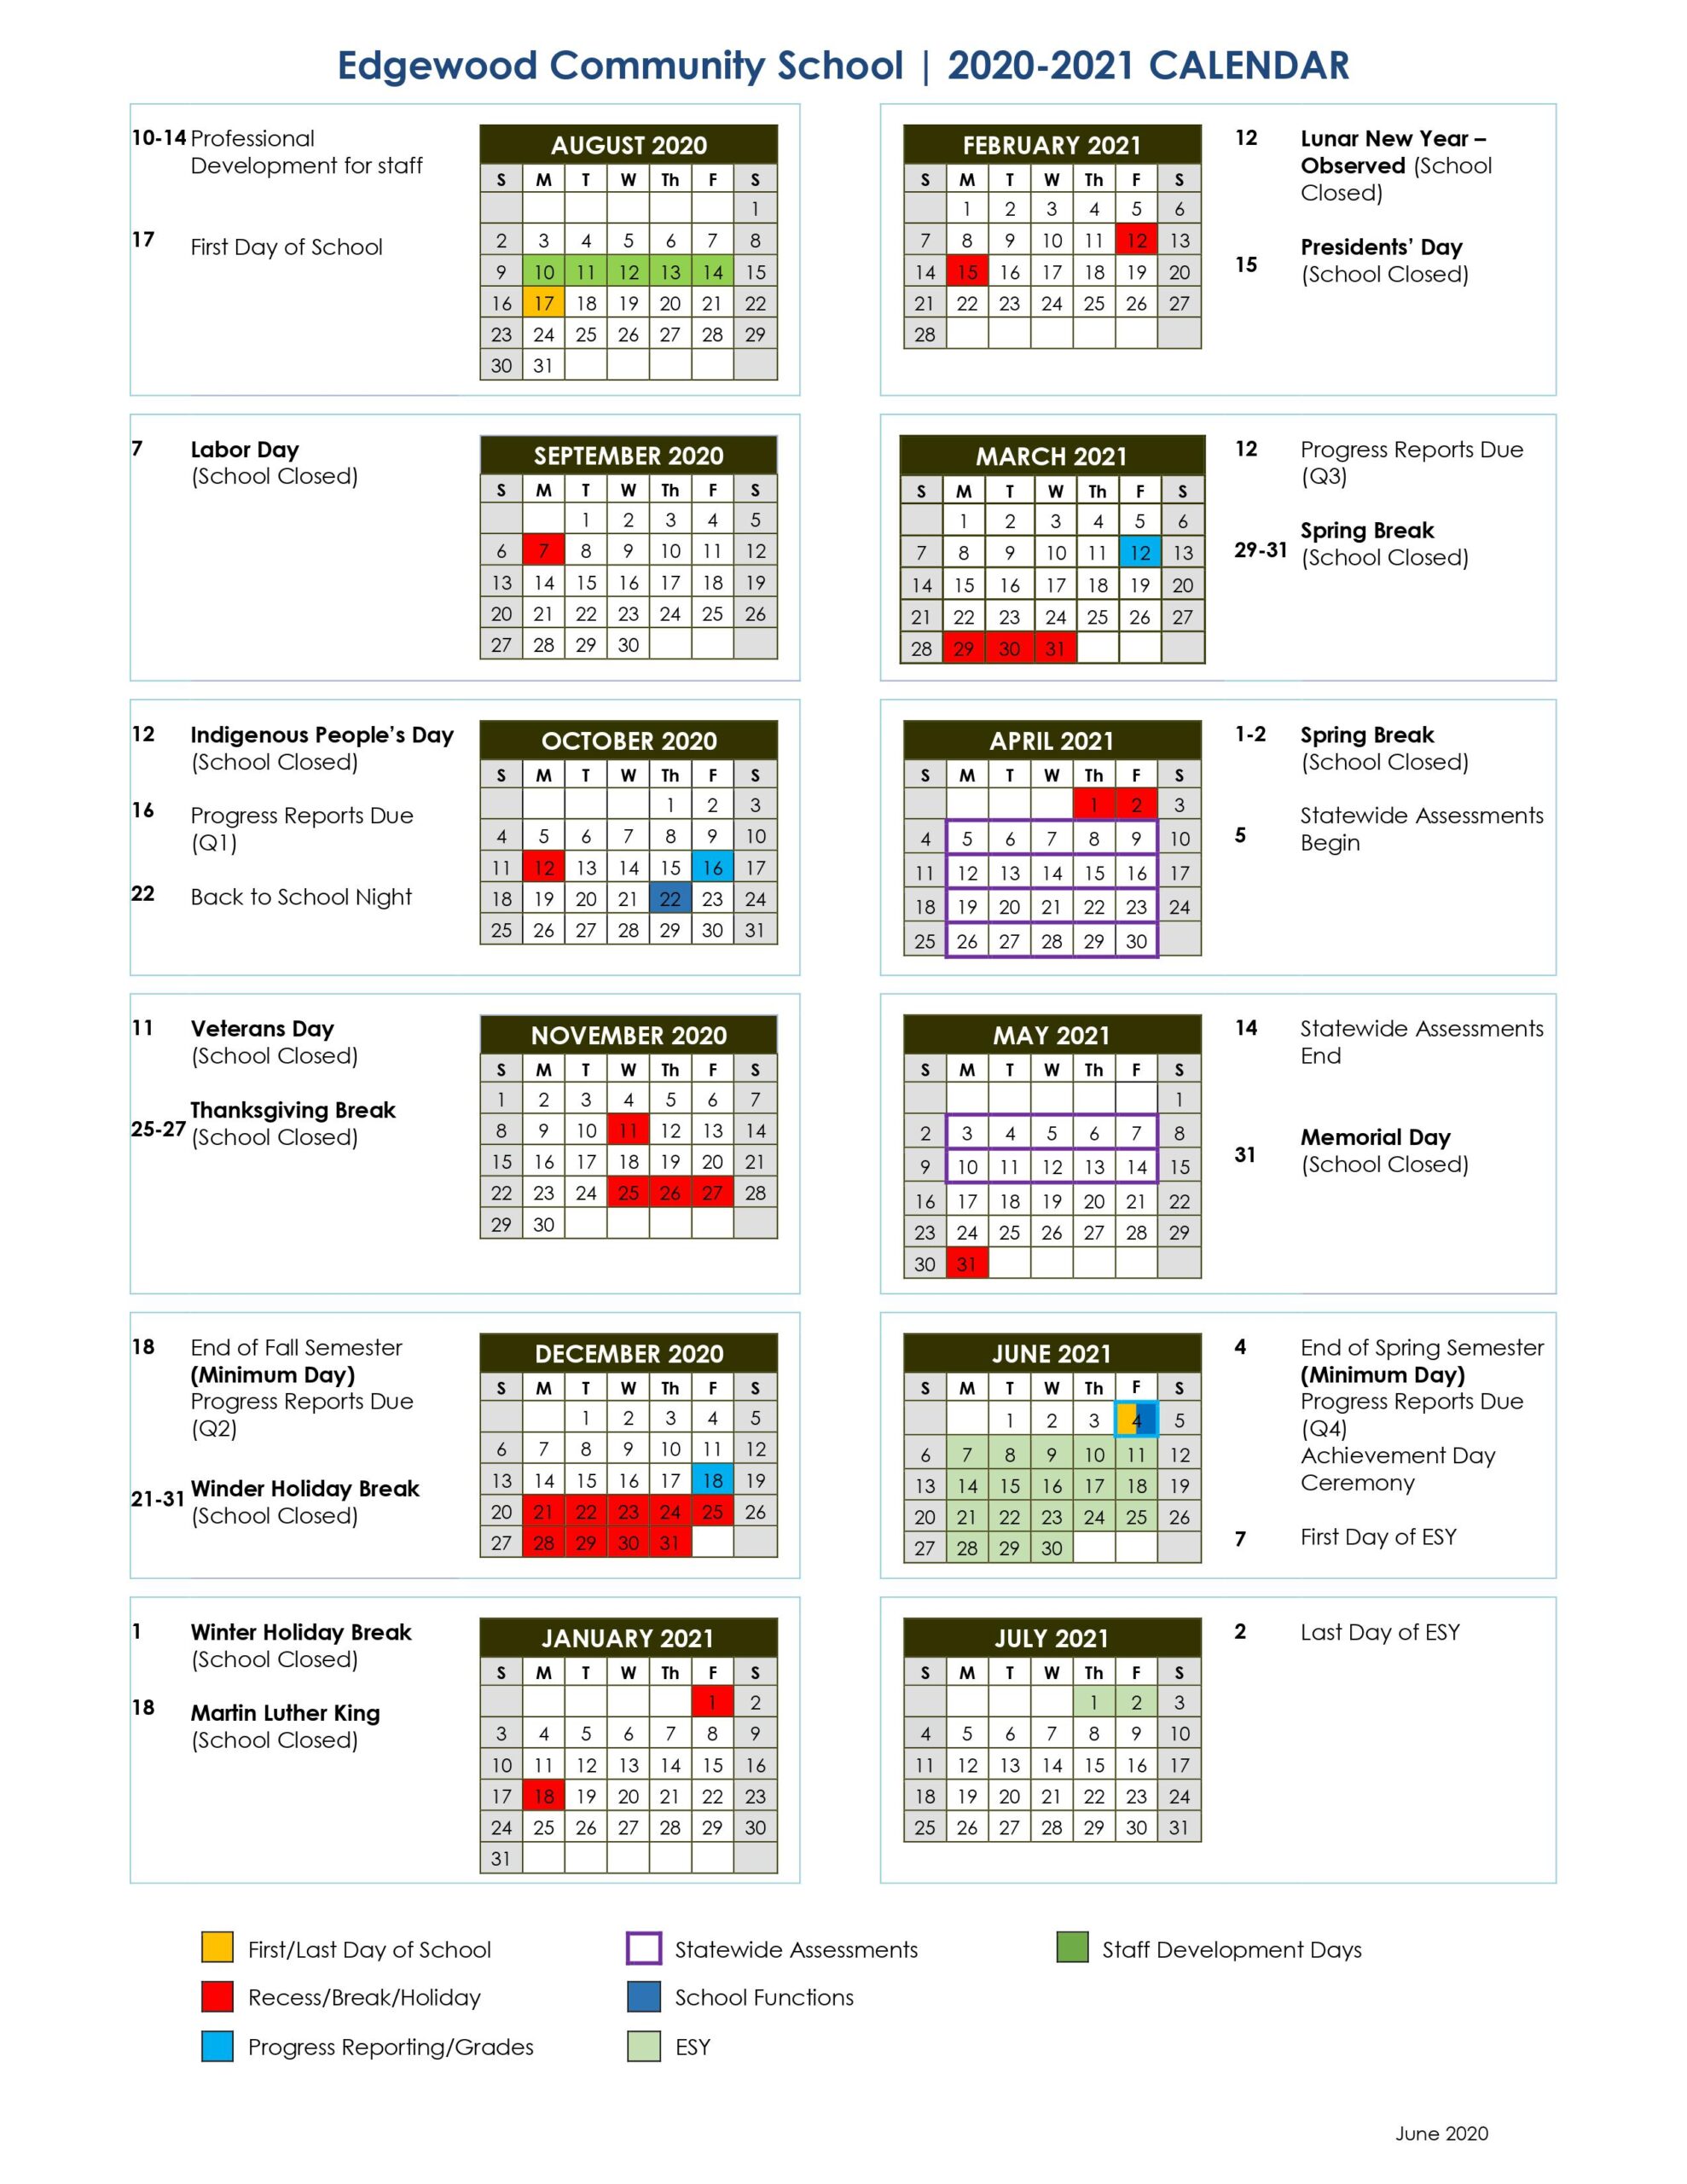 Edgewood Community School 2020-2021 Calendar - Edgewood Center for